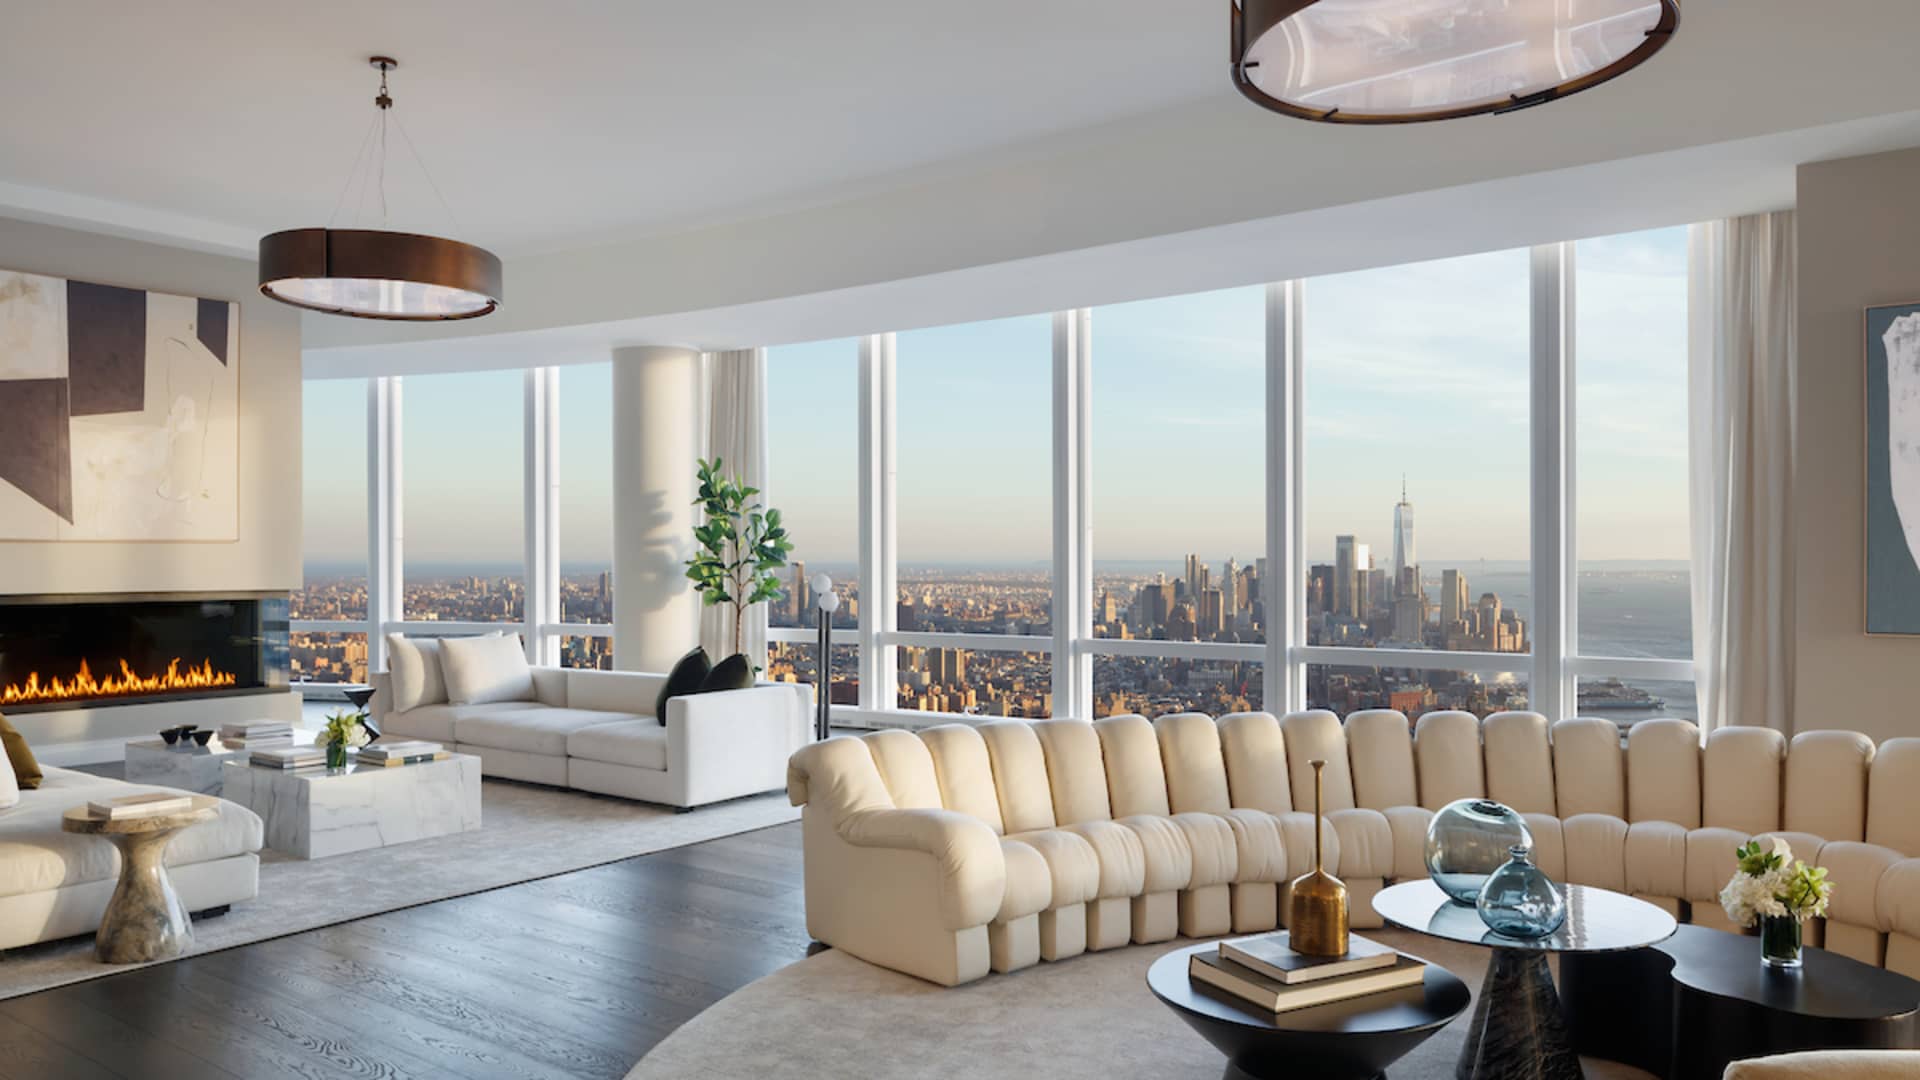 The penthouse has 360-degree views of the Manhattan skyline.